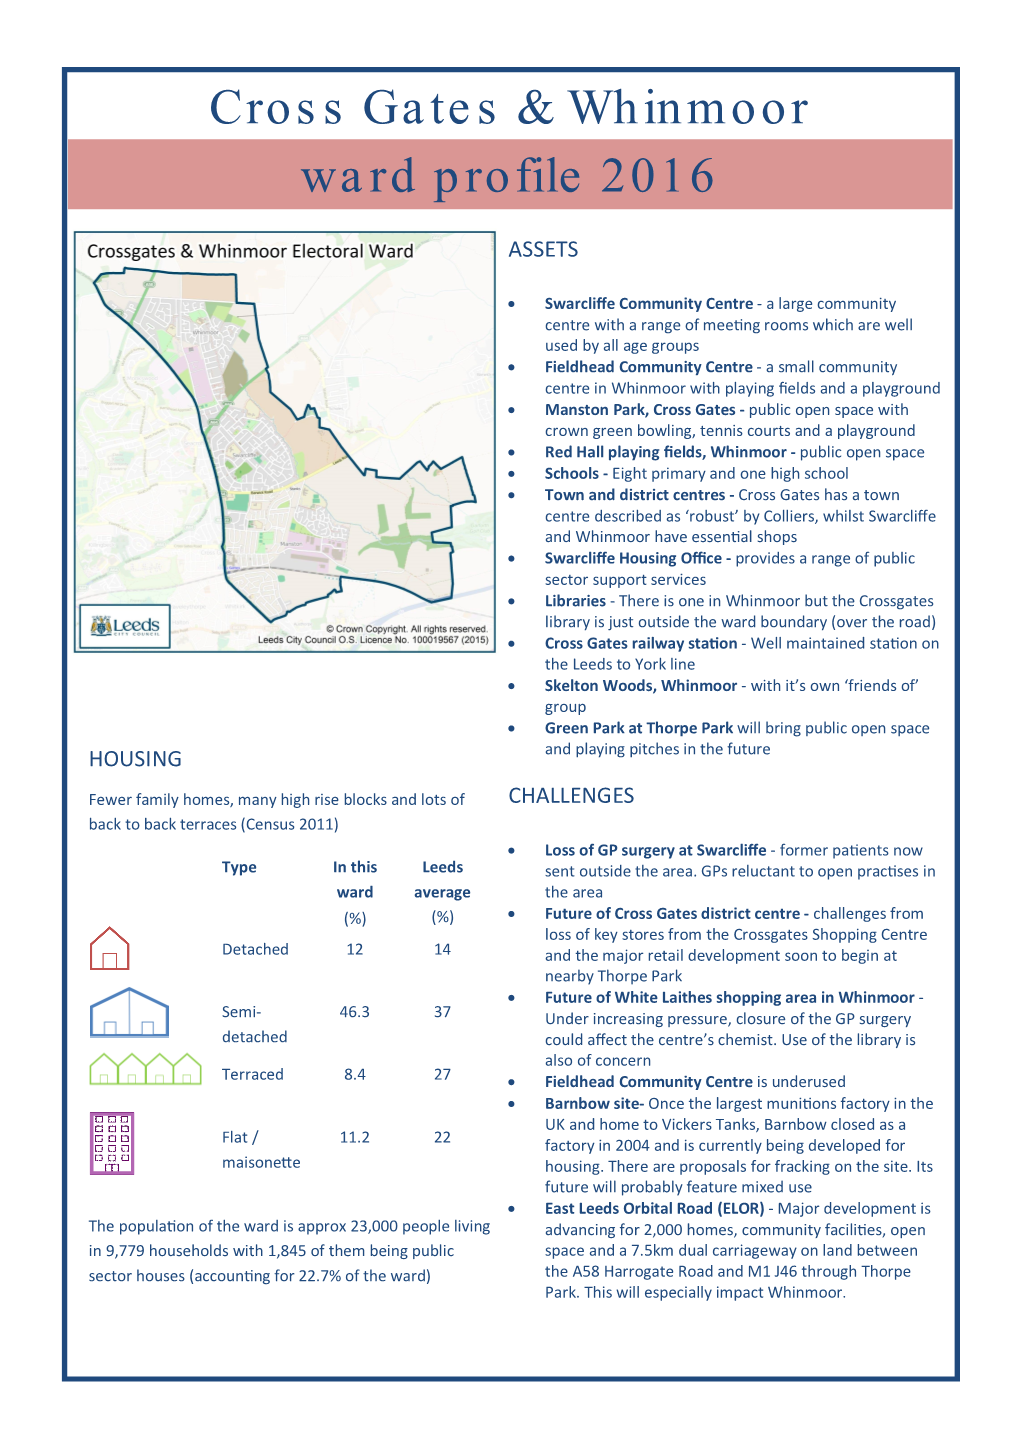 Cross Gates & Whinmoor Ward Profile 2016